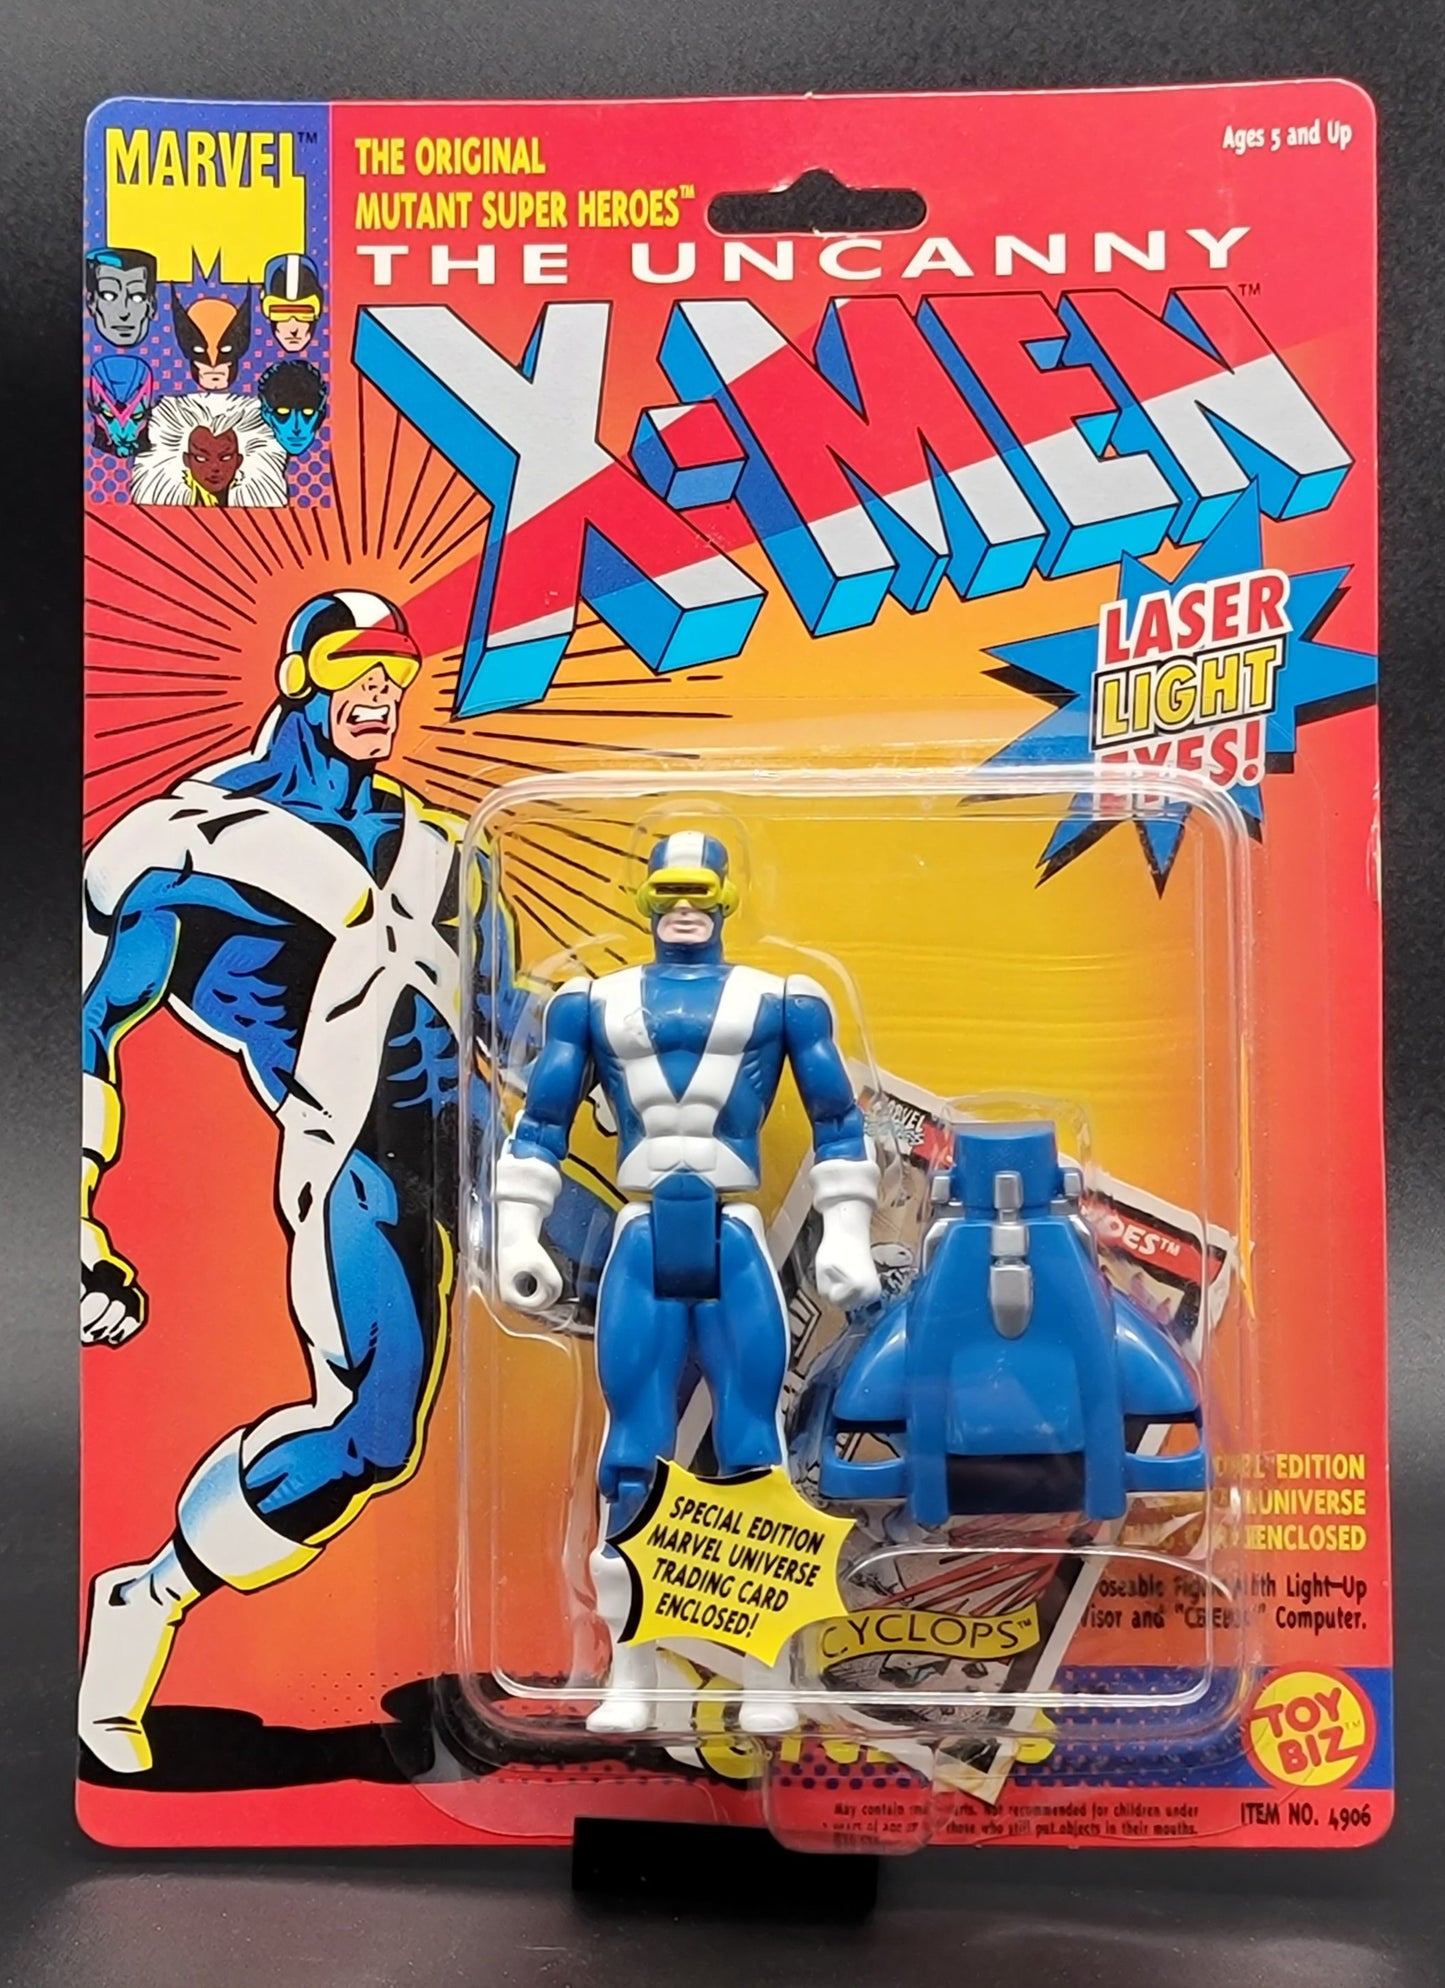 Cyclops 1991 Toybiz (laser eyes) blue and white variant